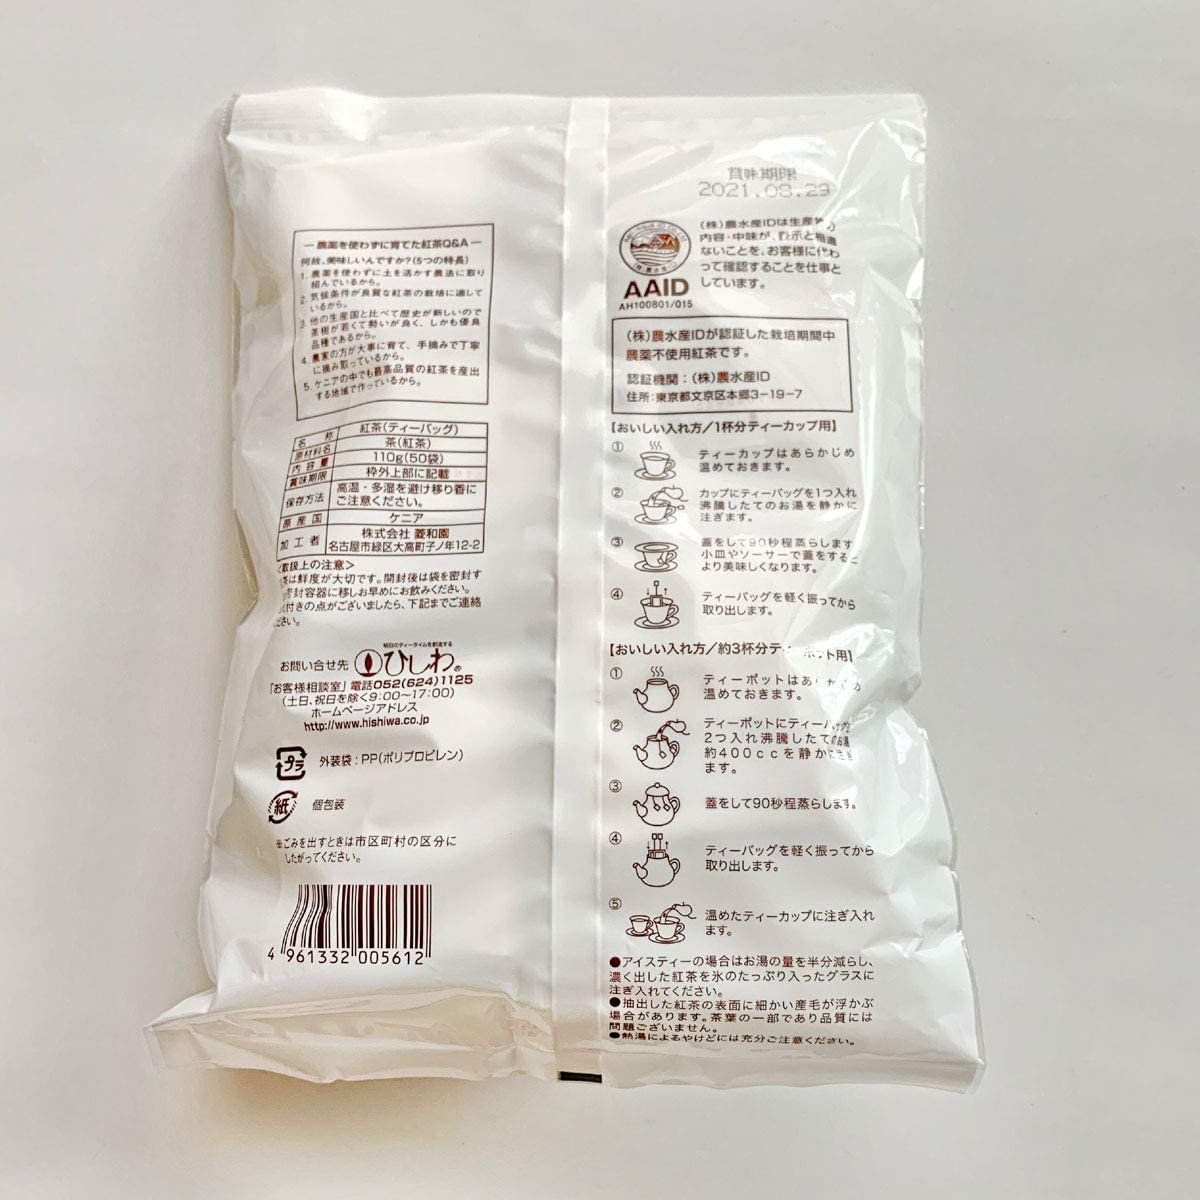 Ryowaen Tea Bags (Grown Without Pesticides) 50 Bags x 2 - NihonMura